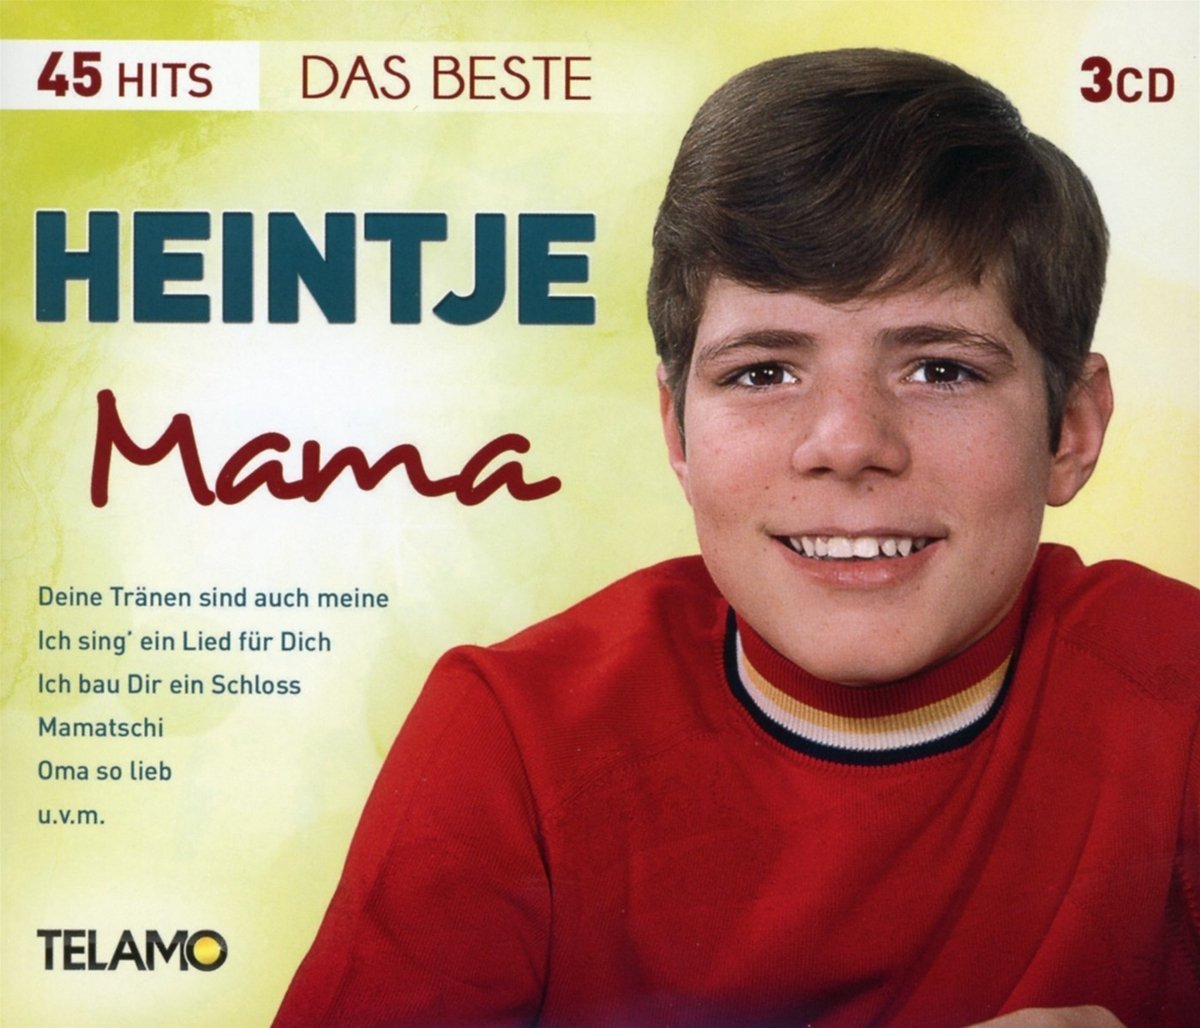 Heintje Mama 45 Hits Das Beste Austriancharts At